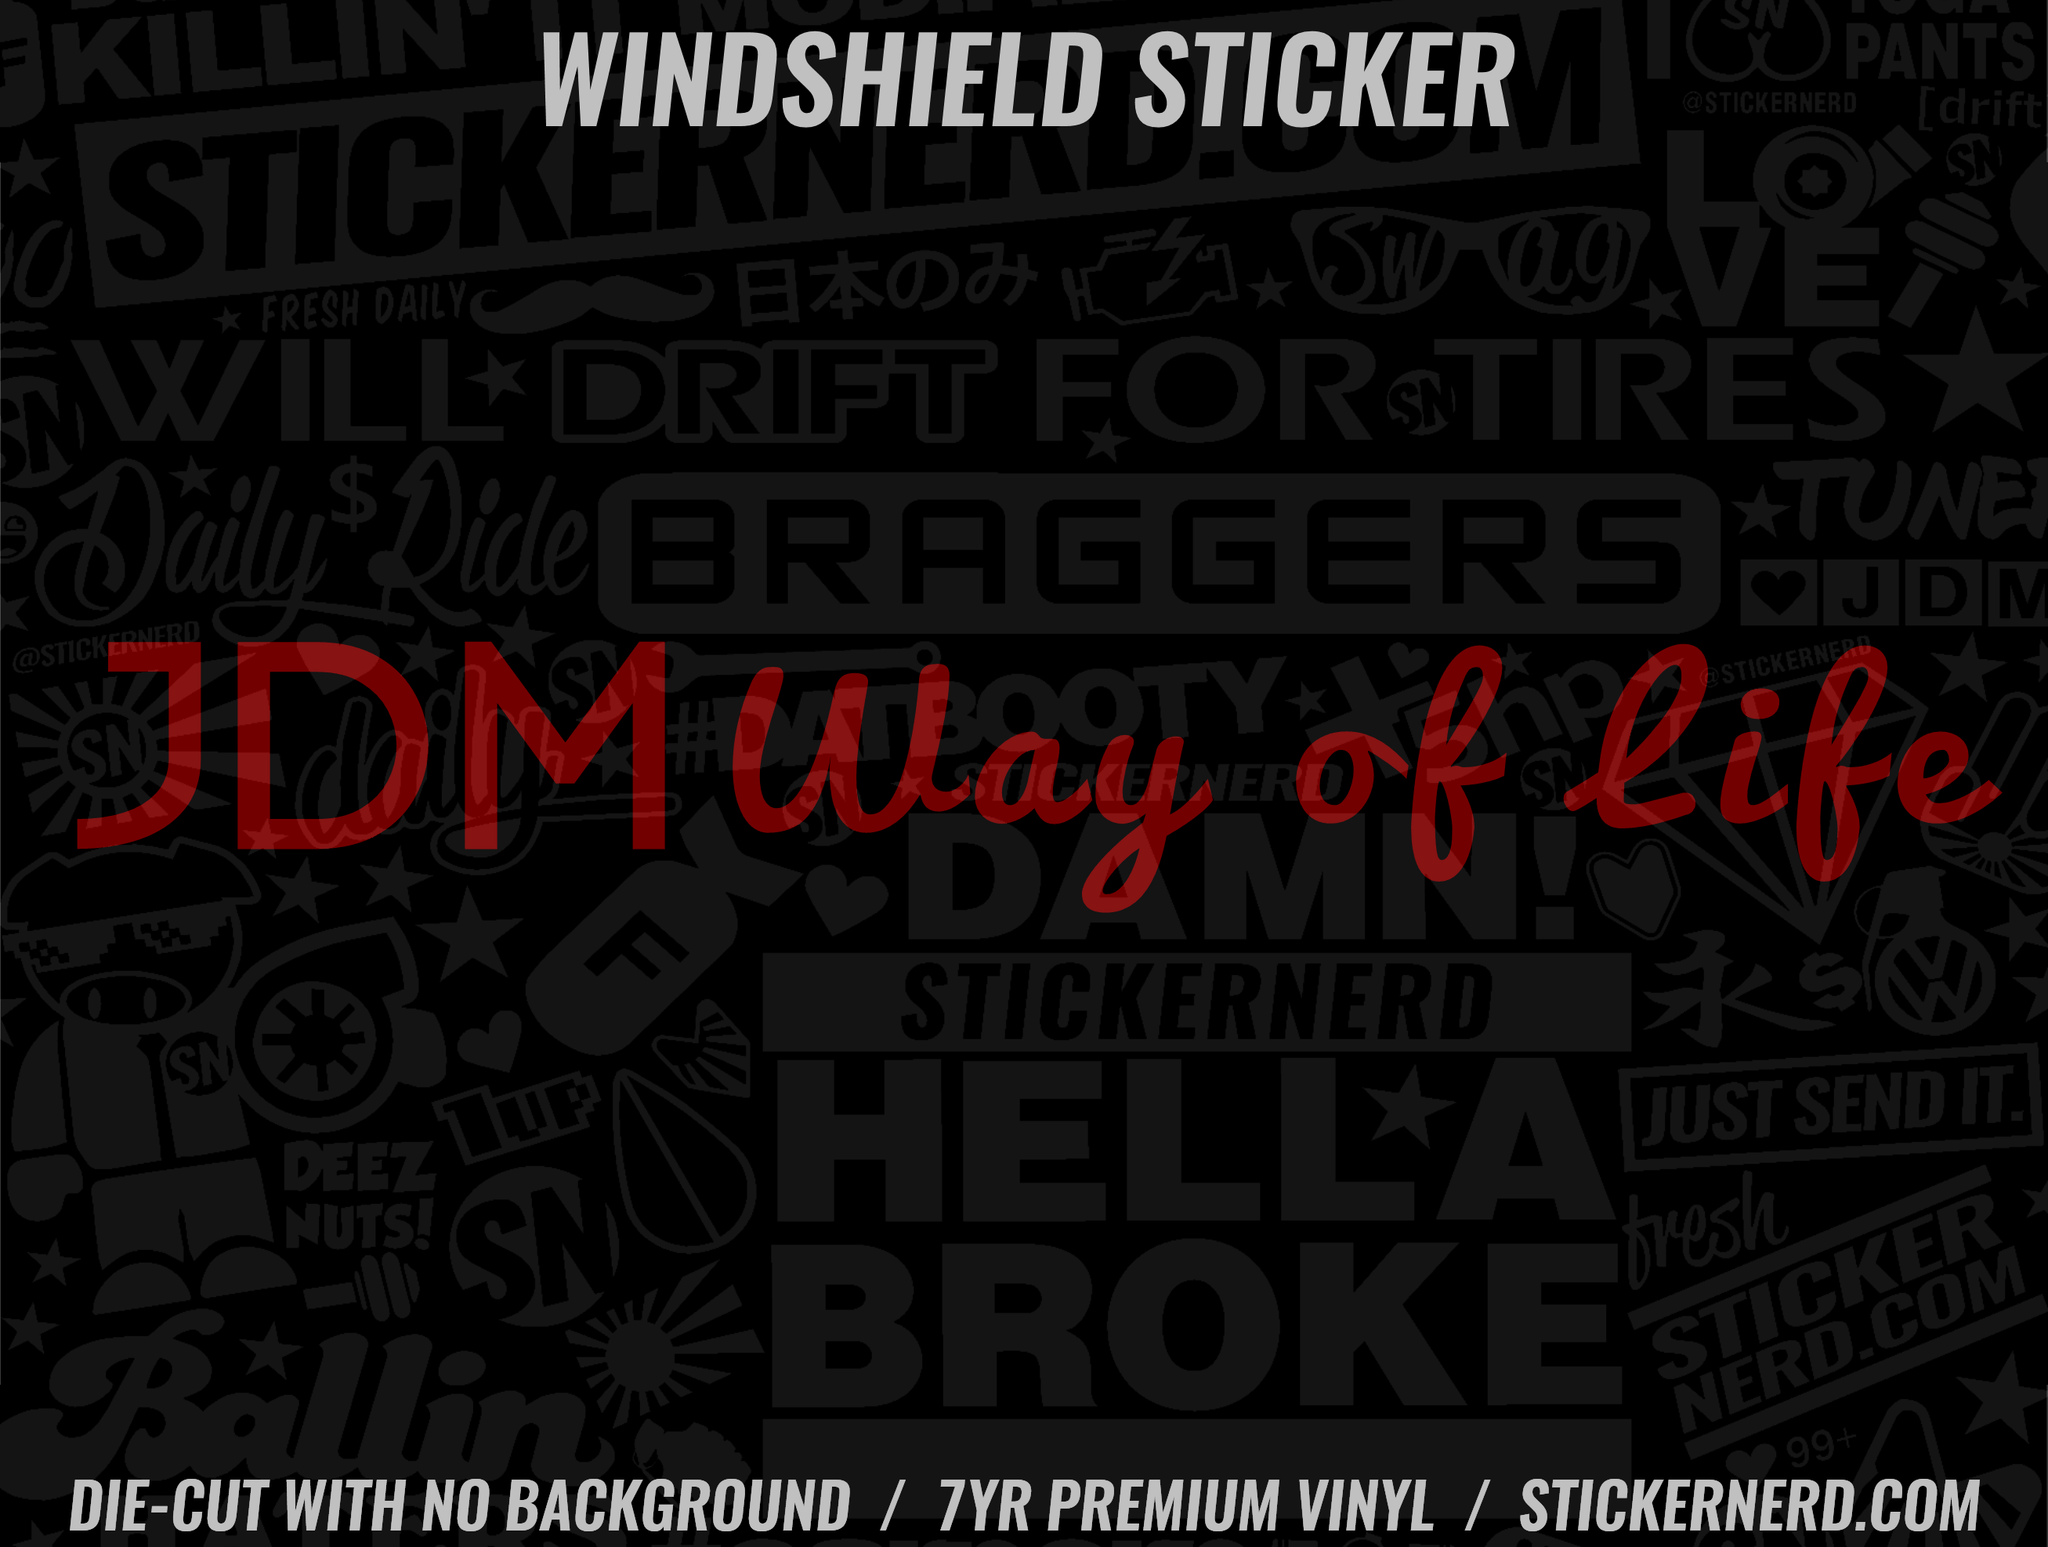 JDM Way Of Life Windshield Sticker - Decal - STICKERNERD.COM